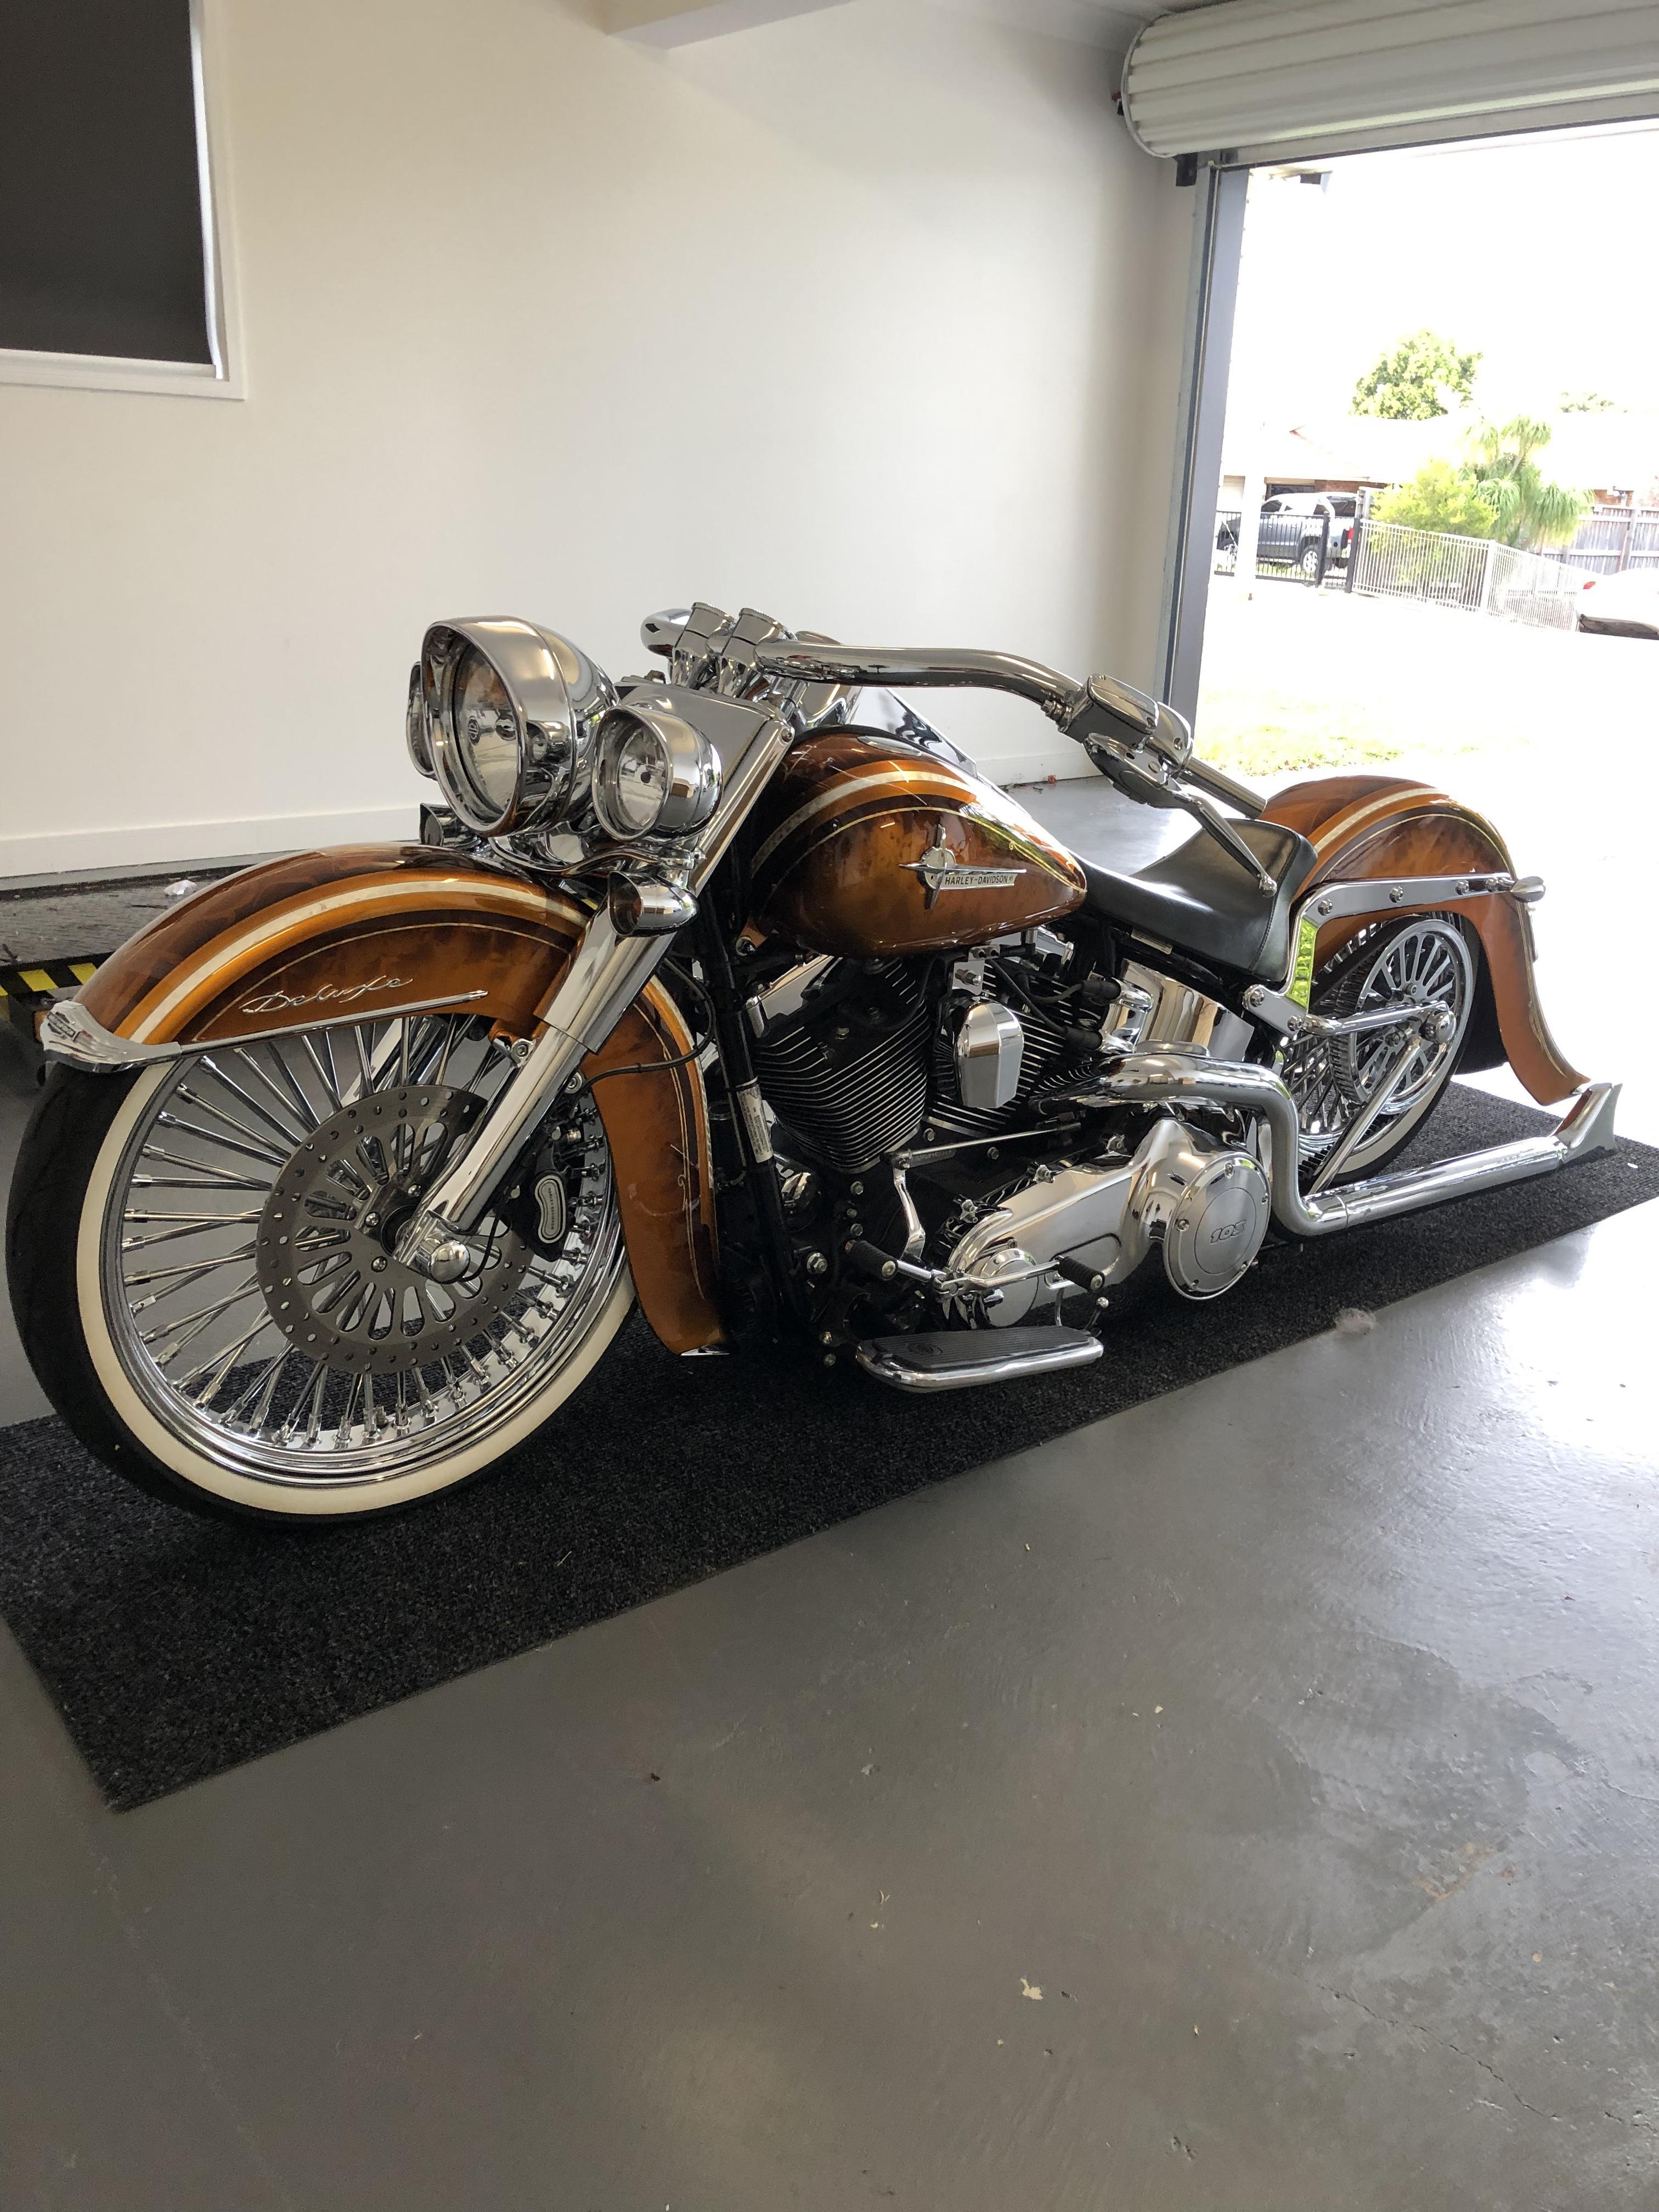 2016 Harley Davidson Custom Softail Deluxe - JBW5064670 ...